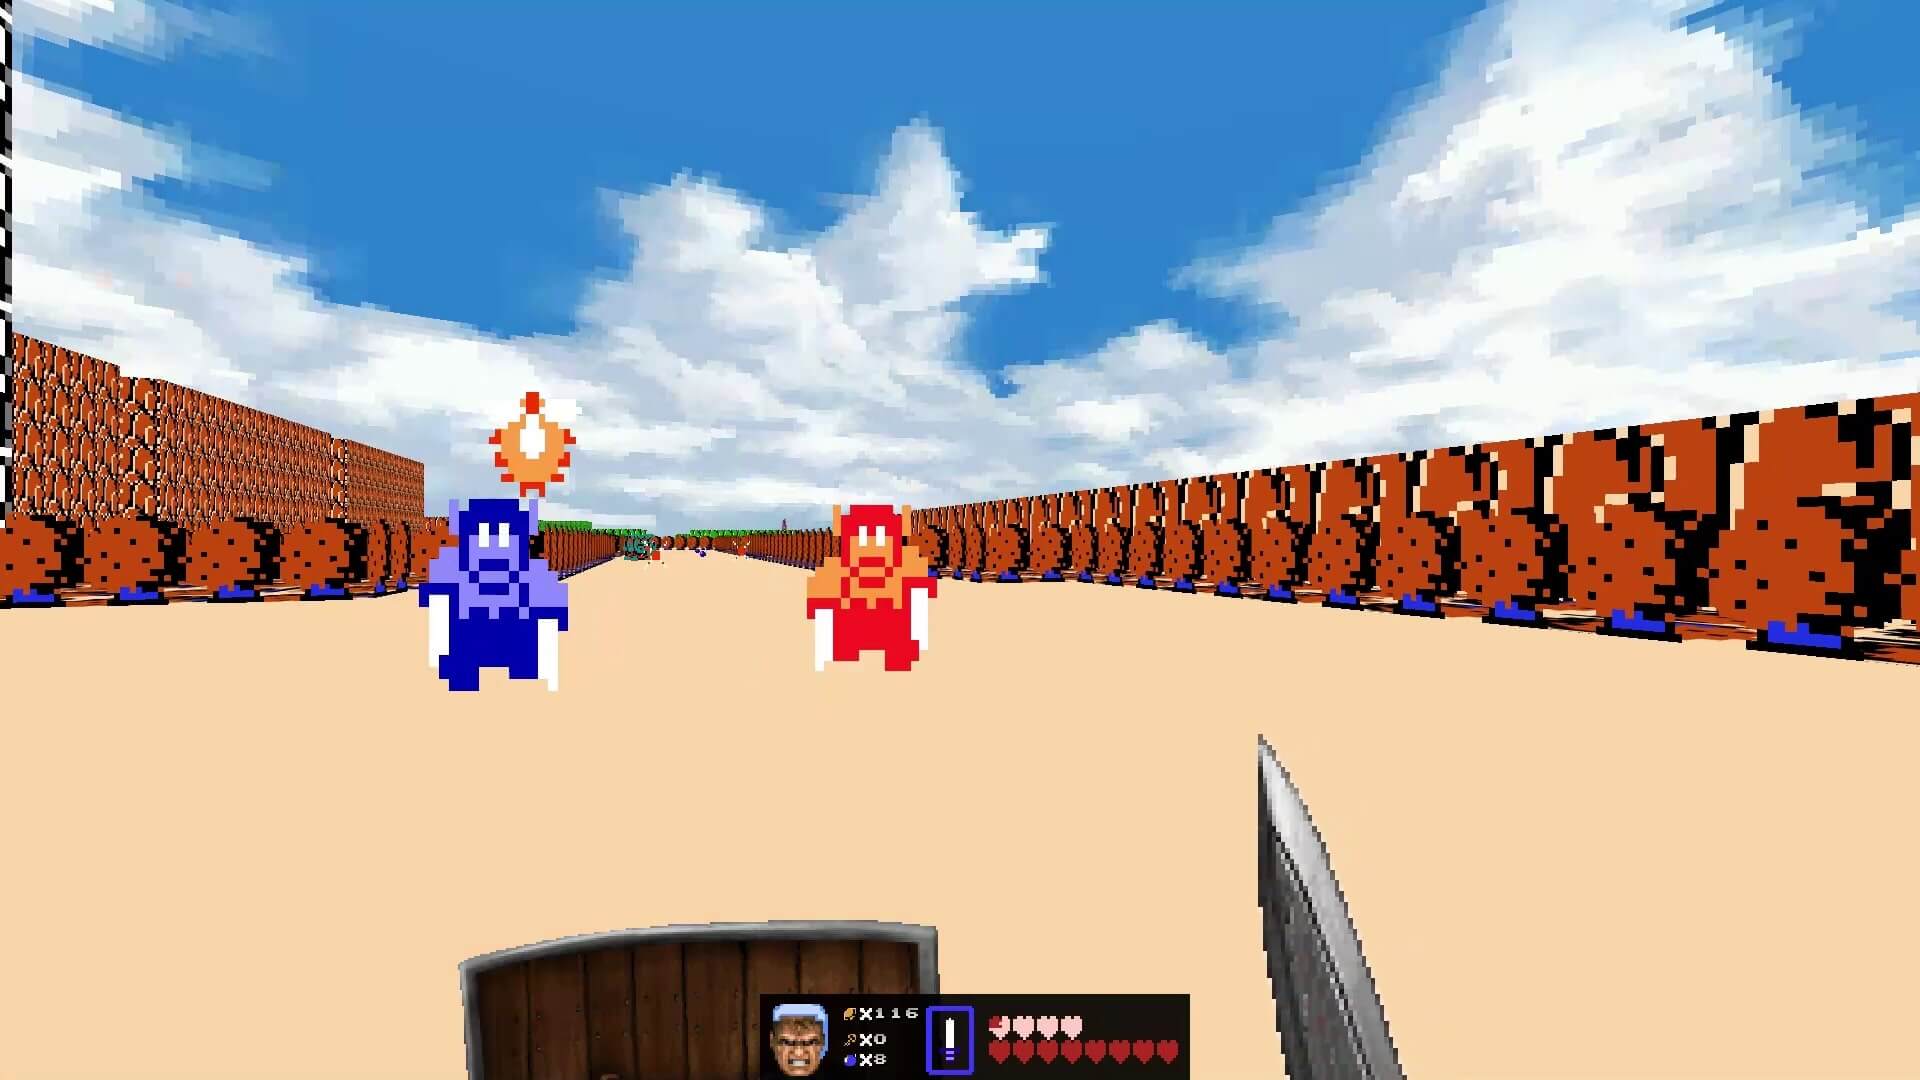 A gameplay screenshot from the Doom II mod Legend of Doom.